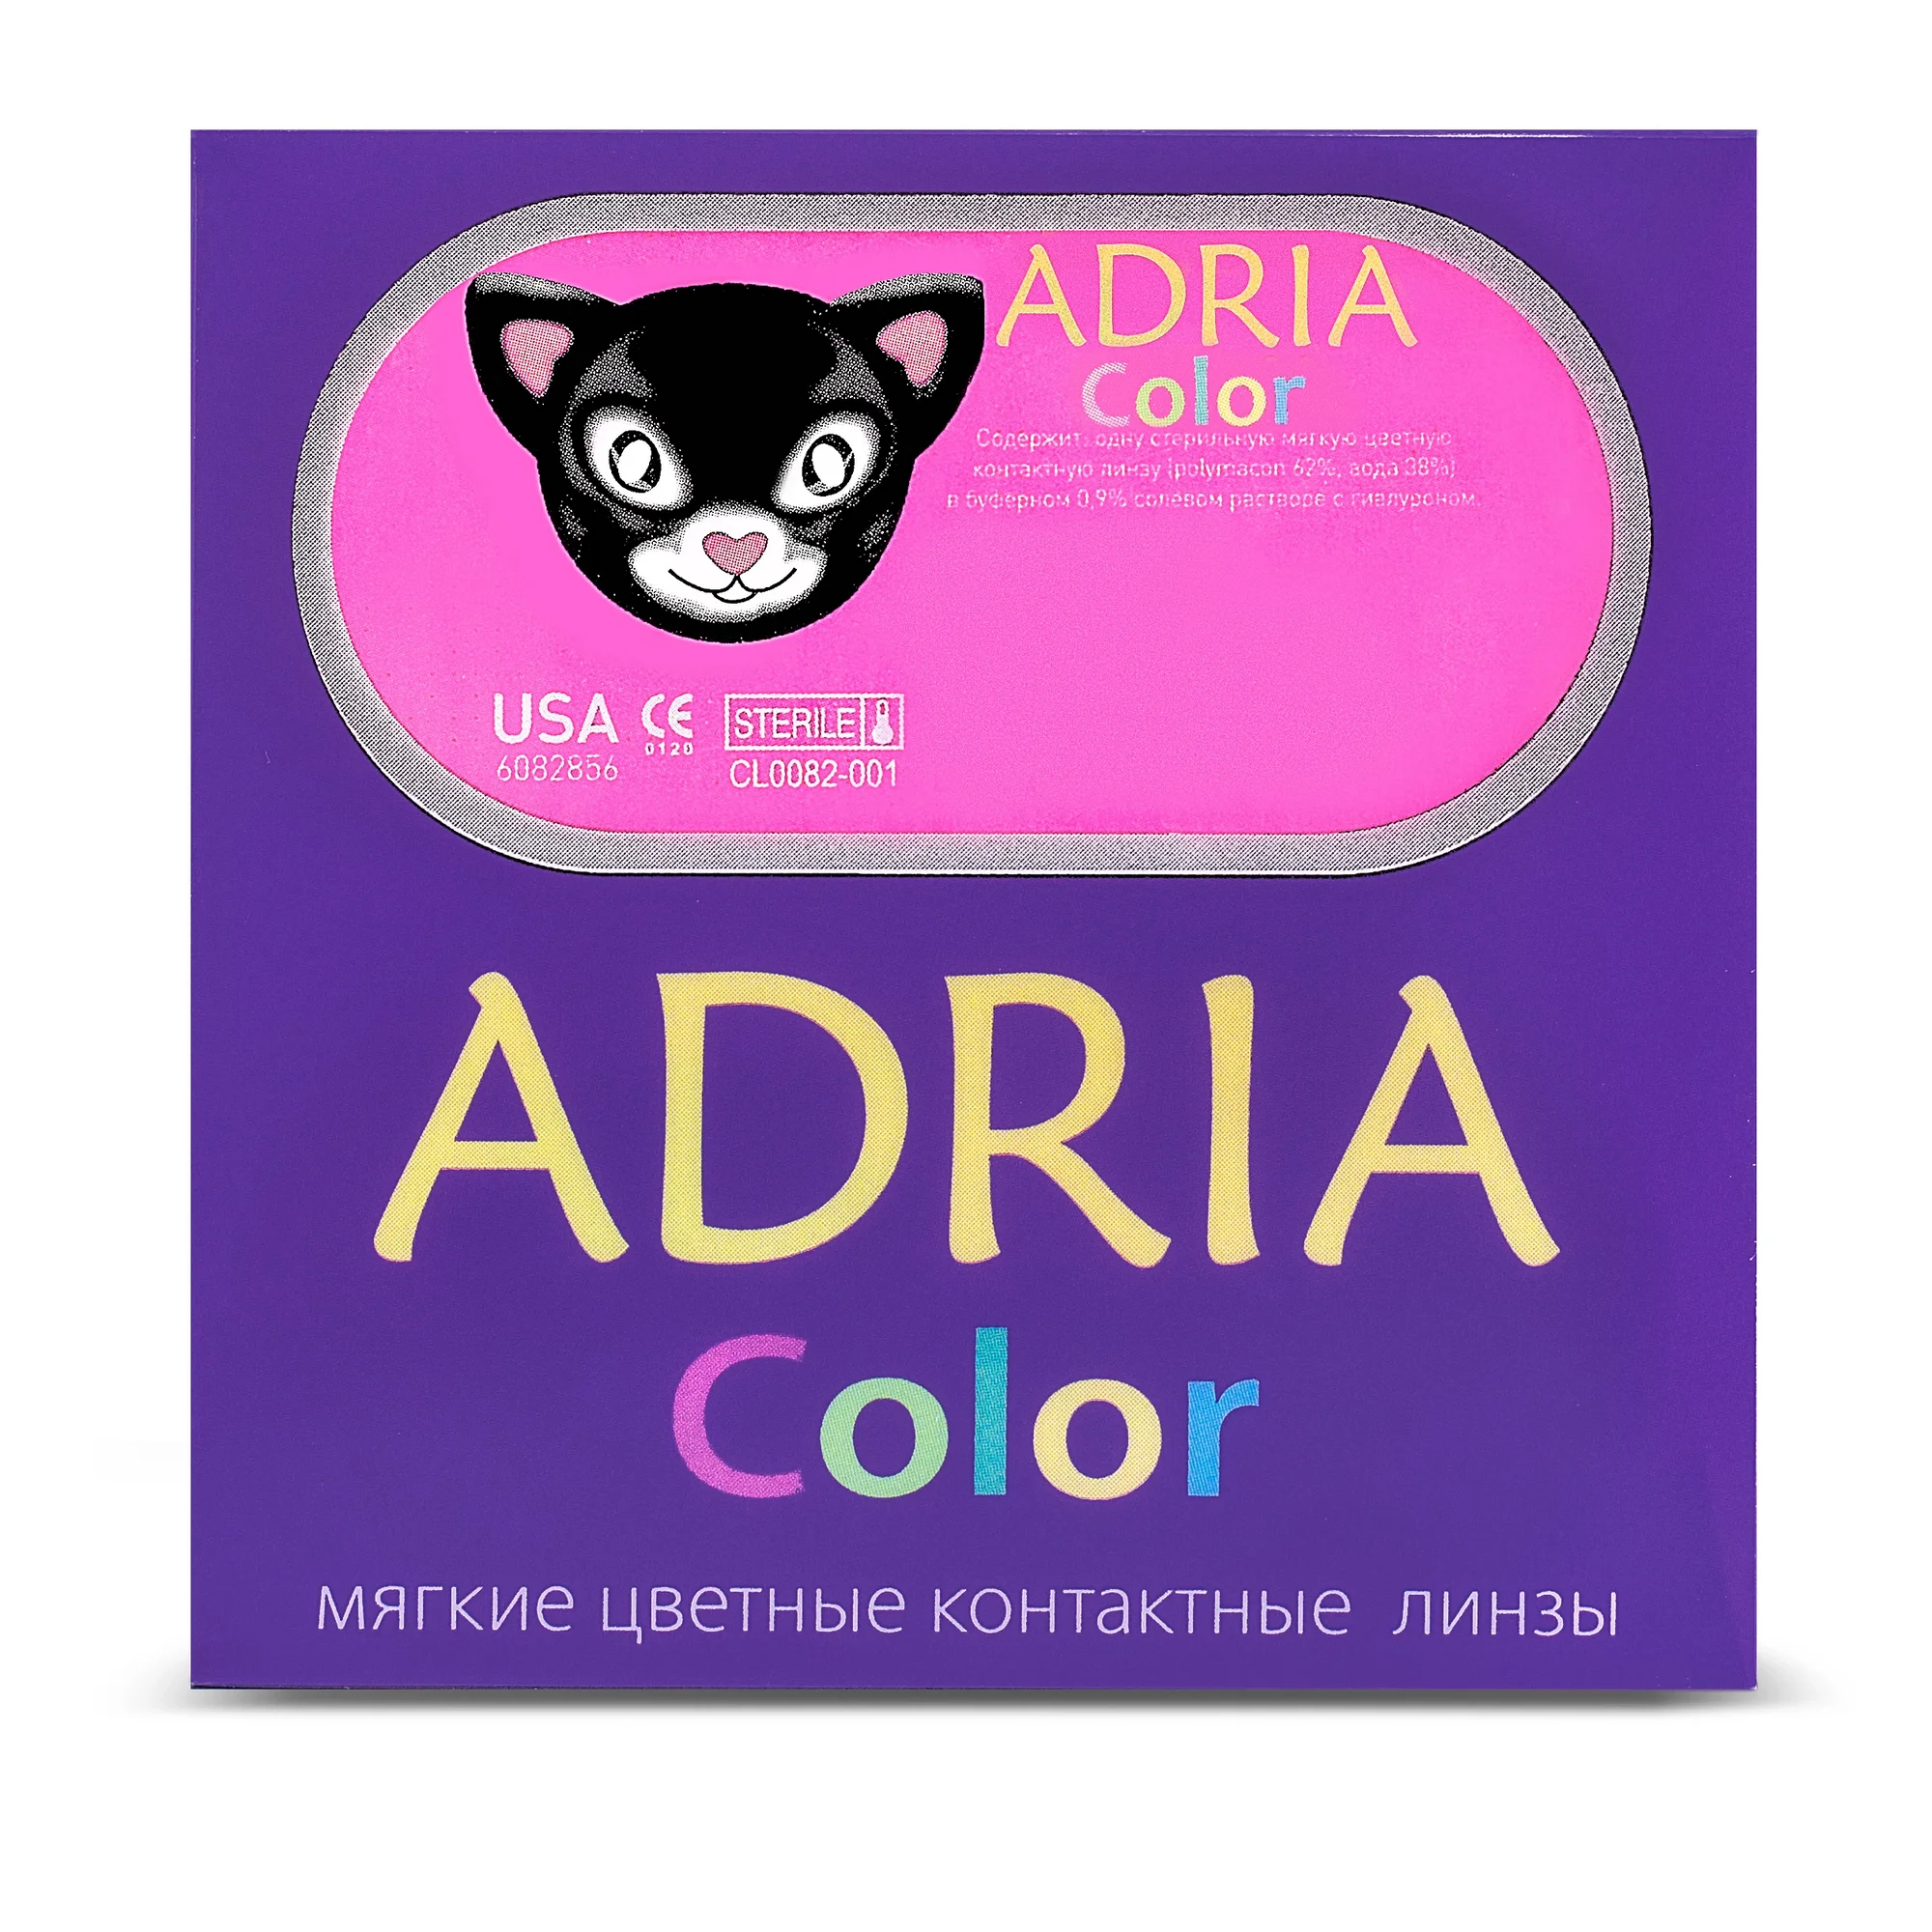 COLOR BOX ADRIA Color 2 Tone Turquoise (бирюзовый)